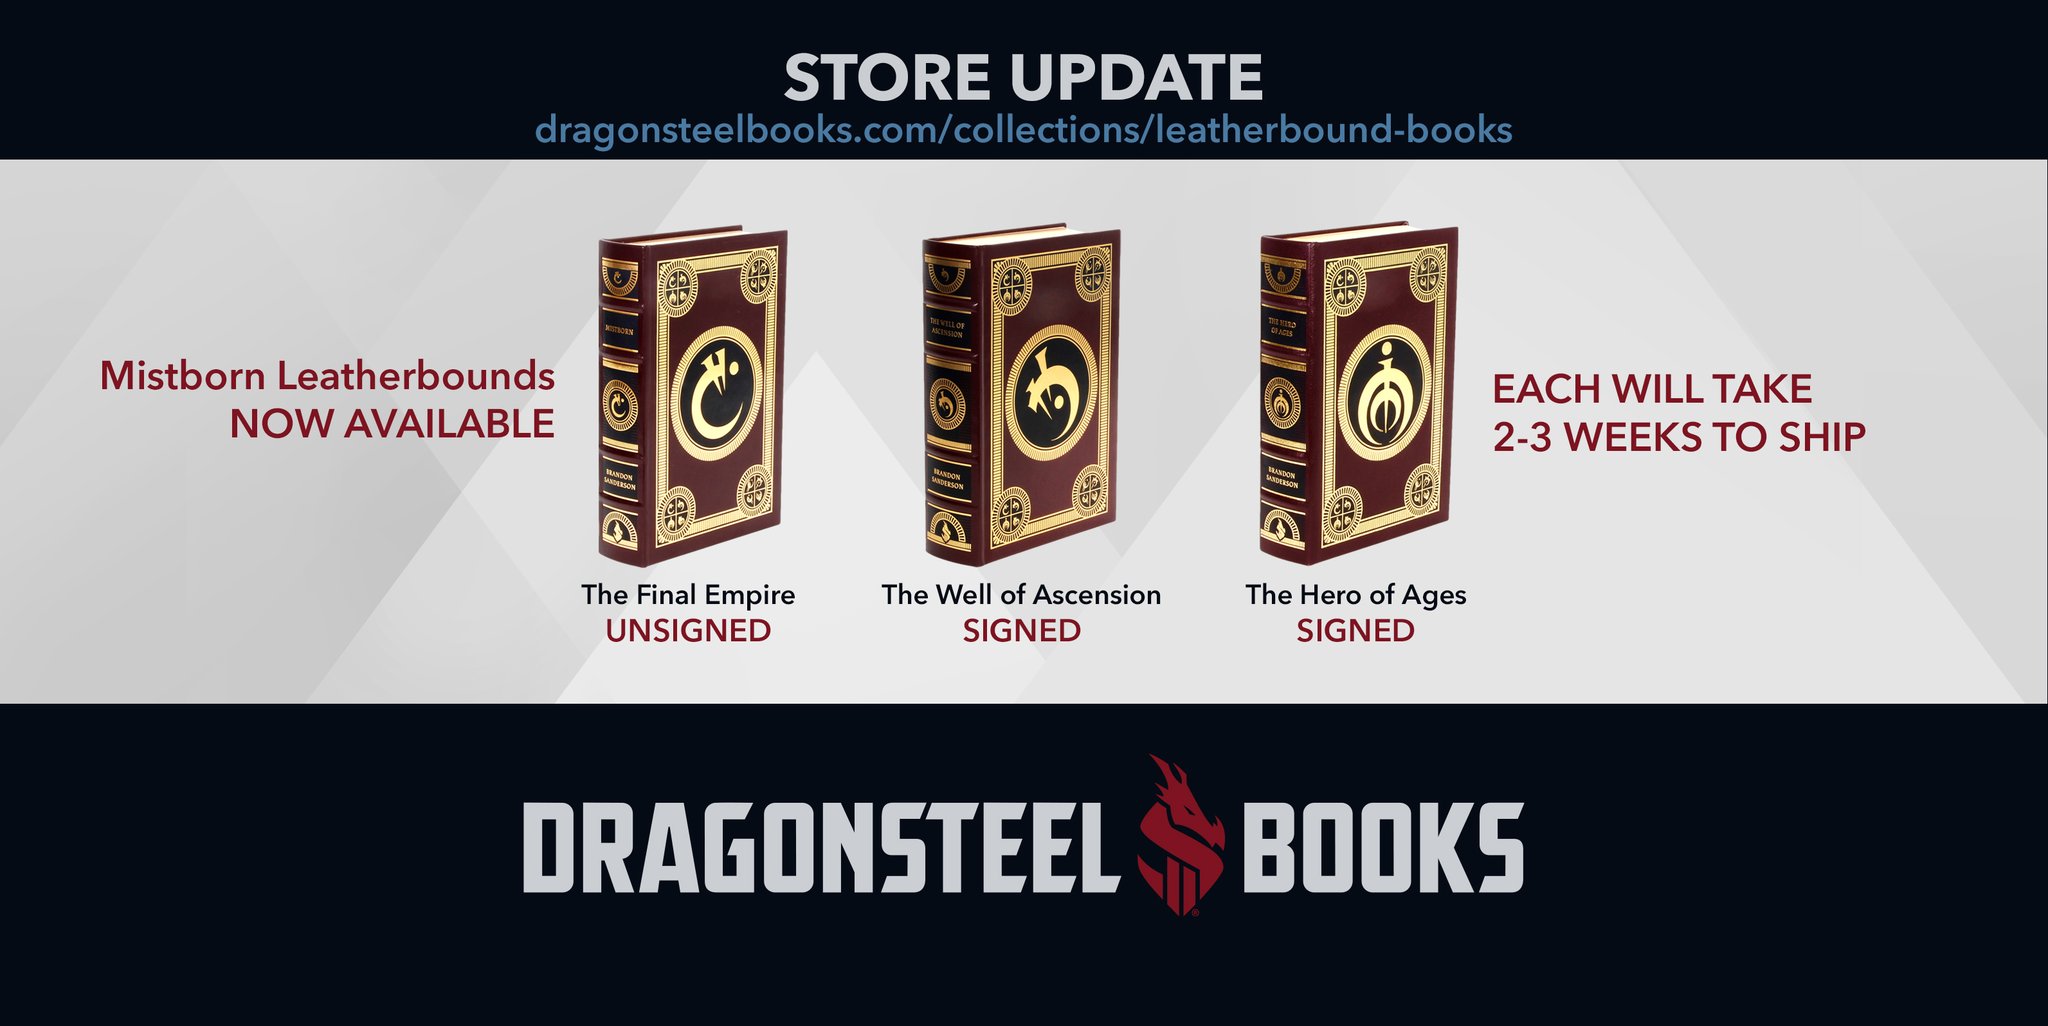 Dragonsteel Books